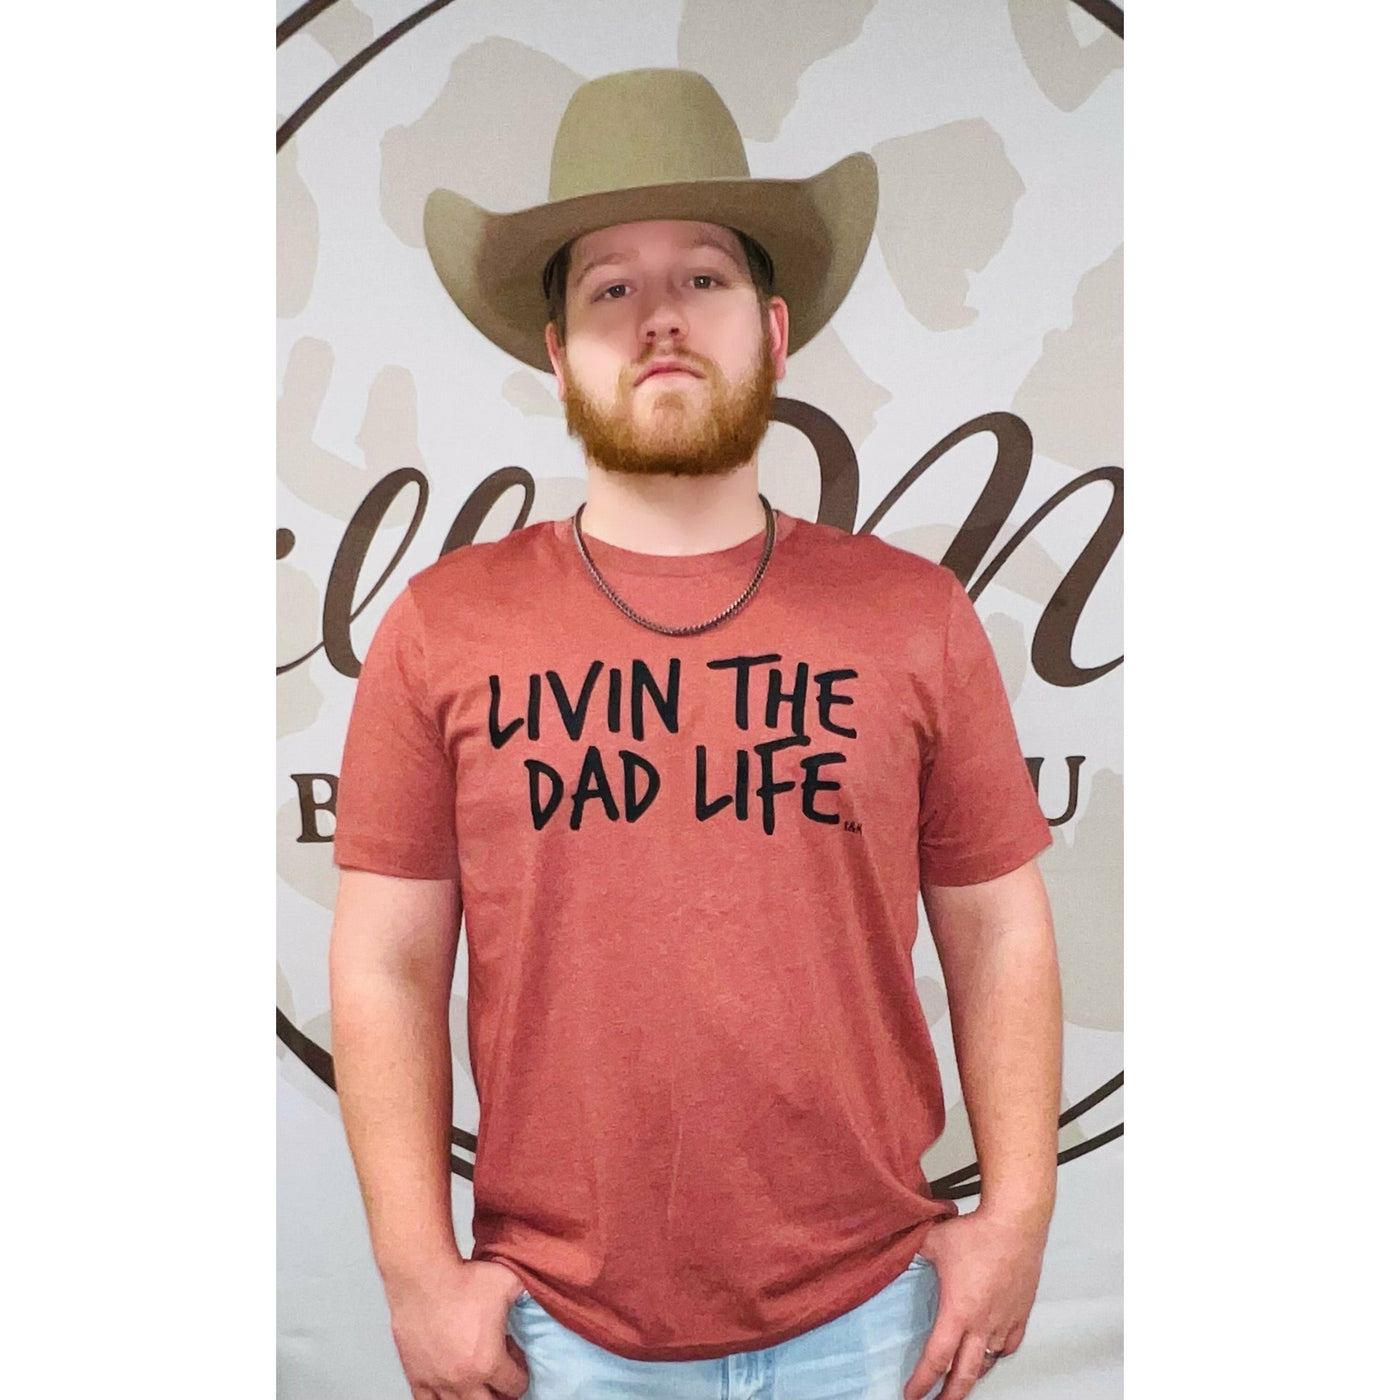 Livin The Dad Life T-shirt